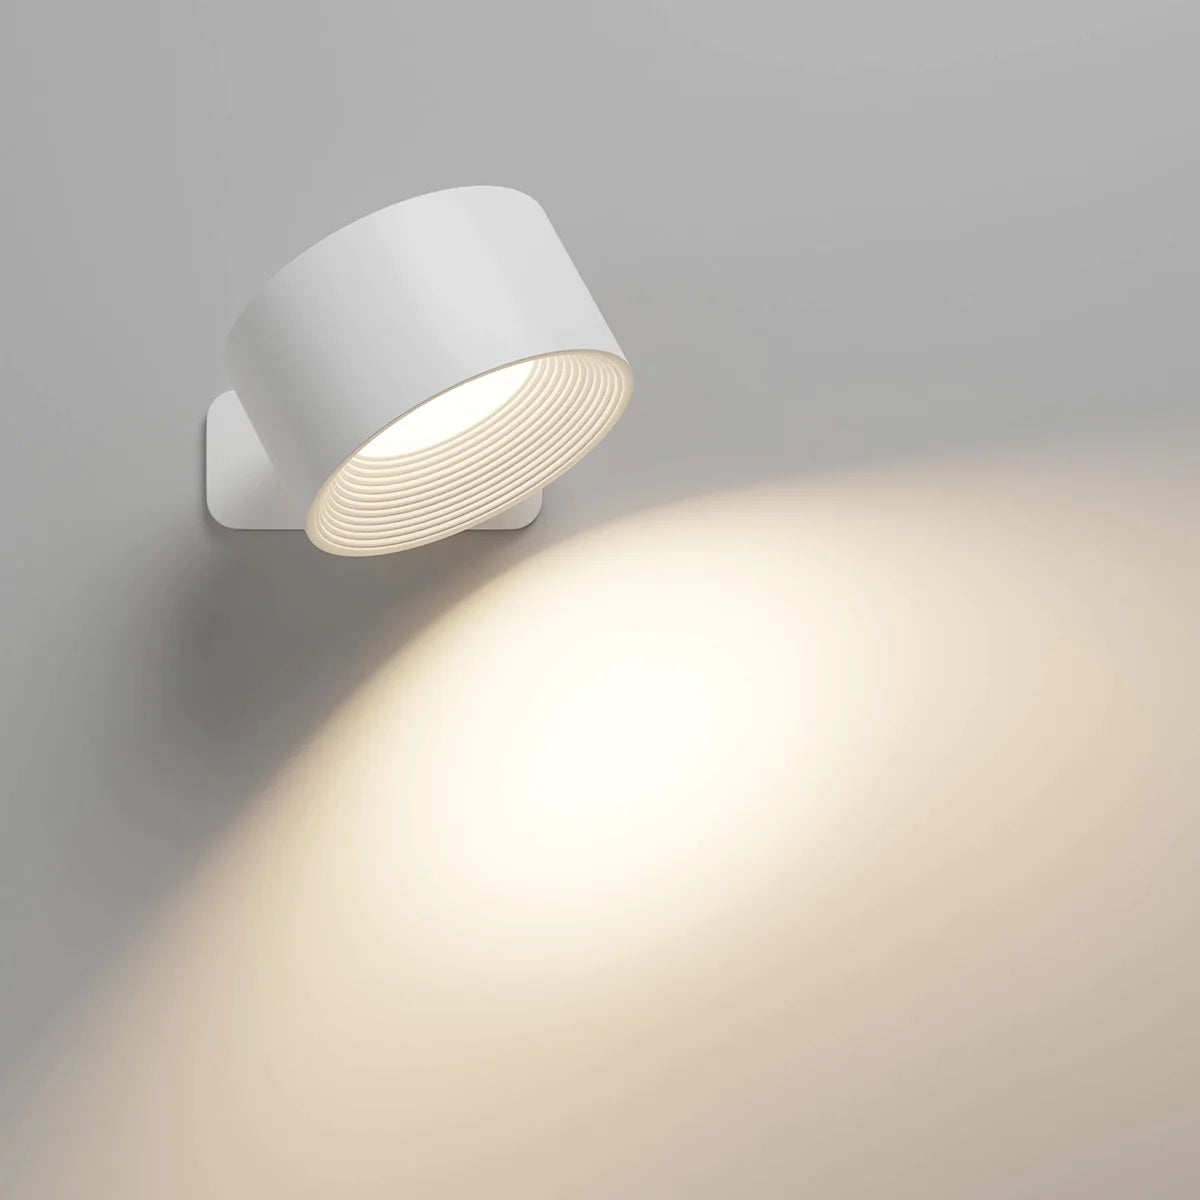 Aktion: 1 Lampe kaufen, 1 Lampe kostenlos dazu Infinity LED-Wandleuchte, kabellos